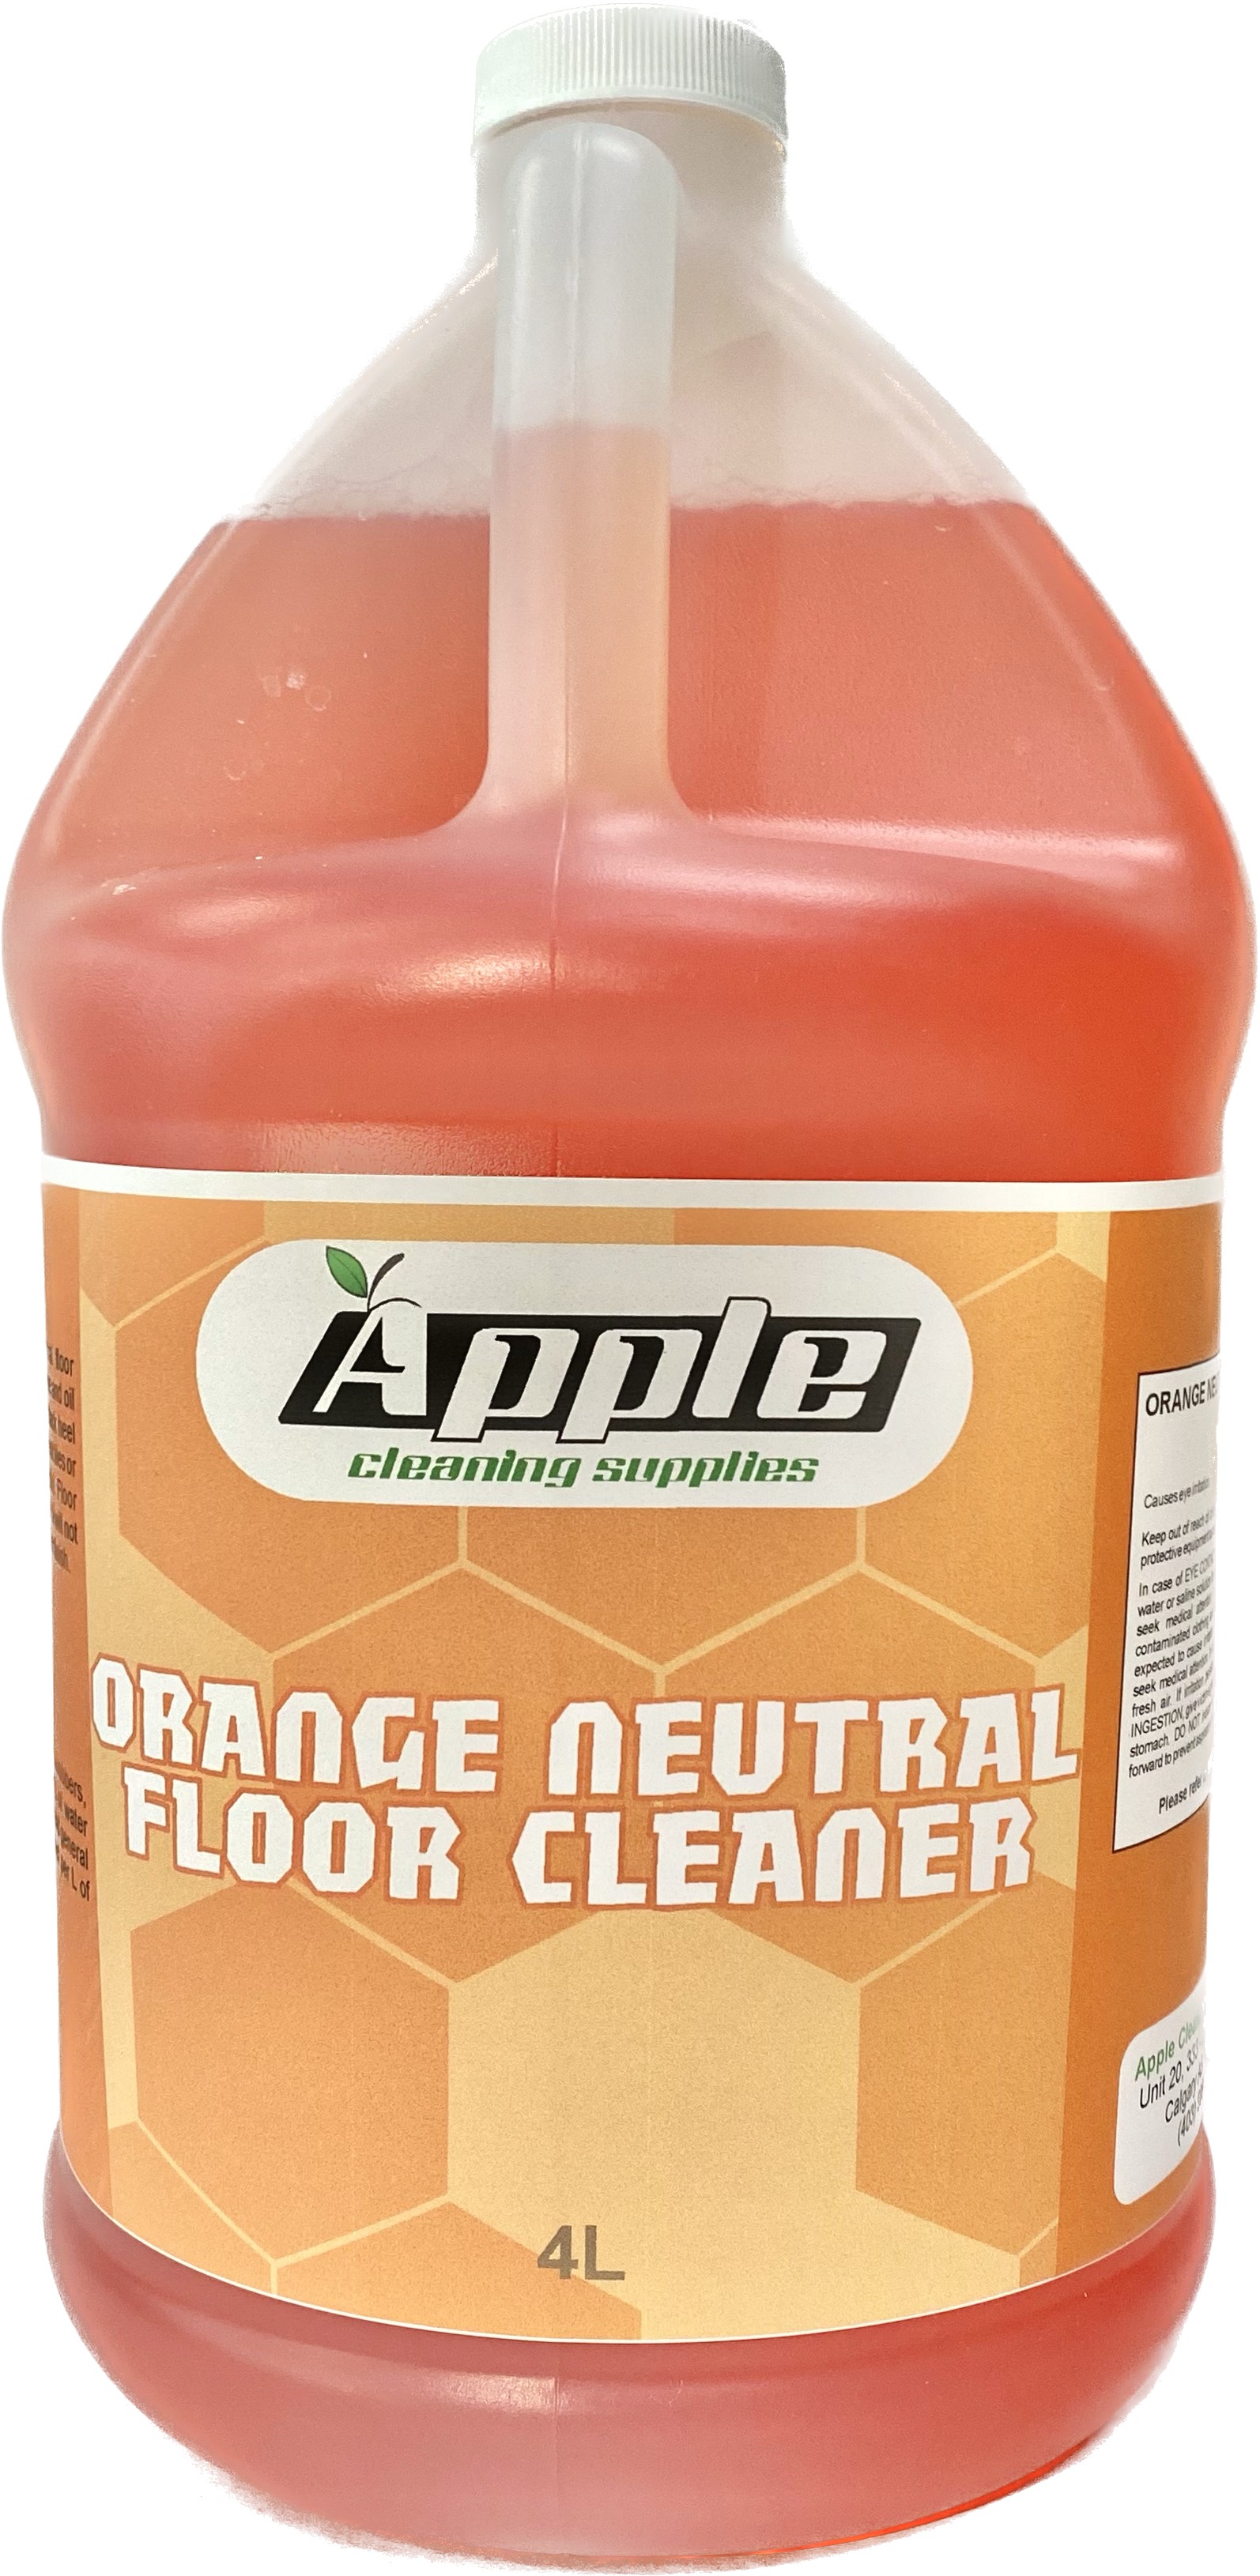 Apple Brand 4L Orange Neutral Floor Cleaner